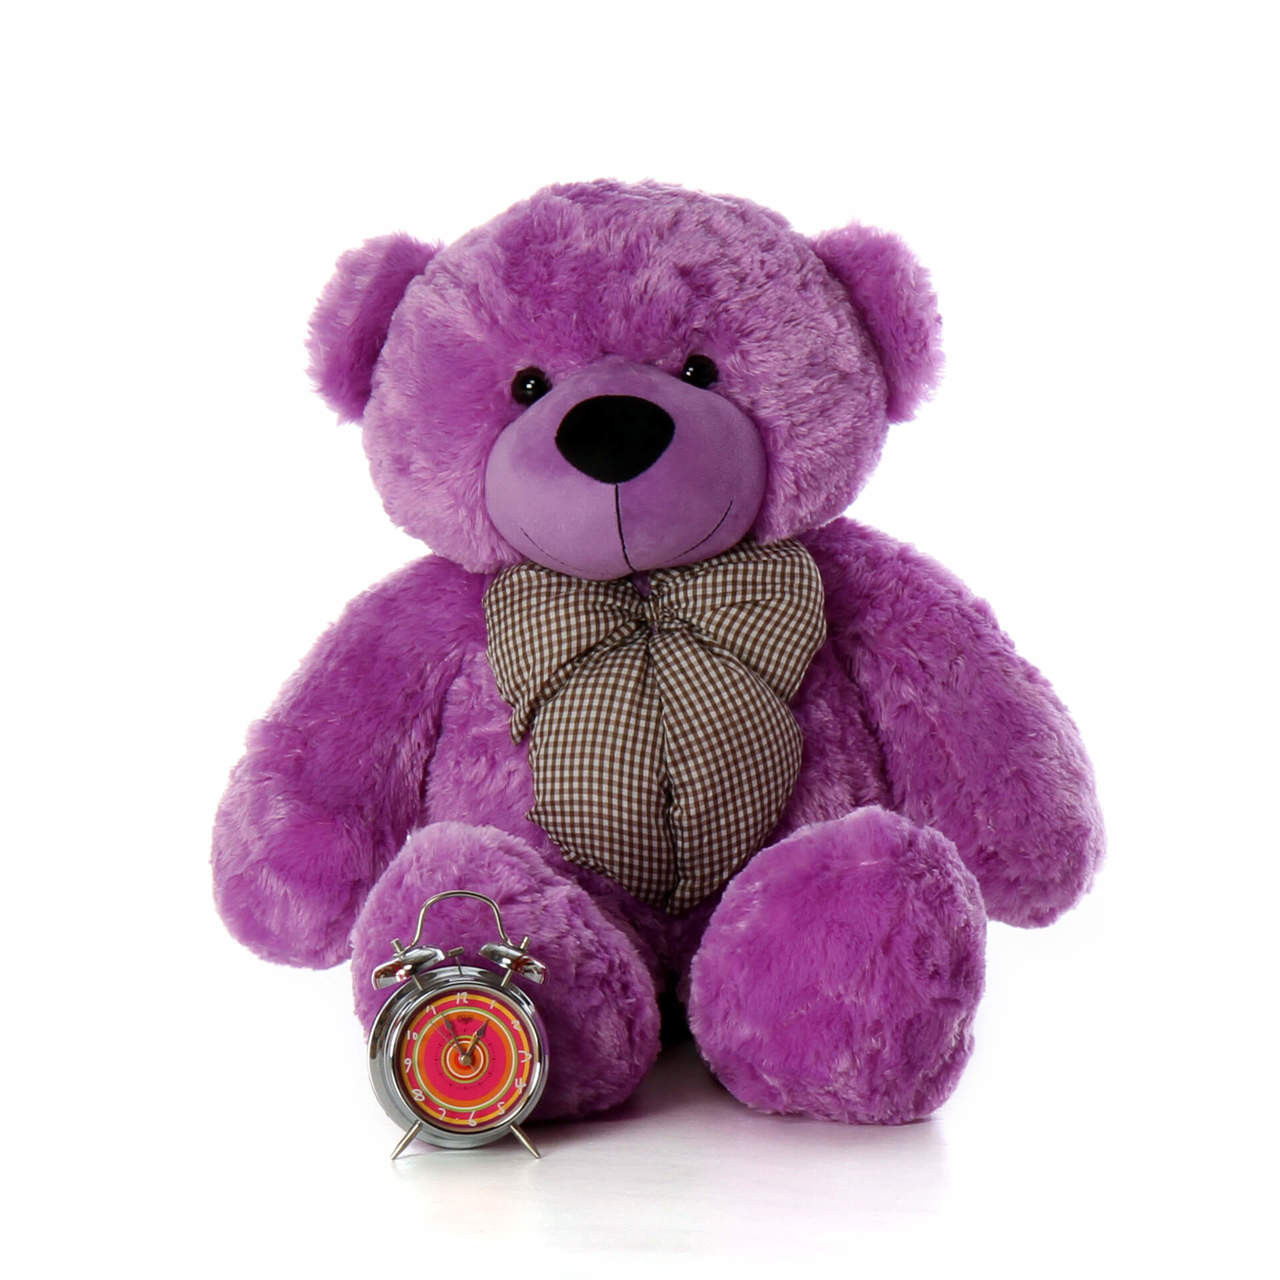 DeeDee Cuddles Giant Teddy bear over 3ft tall most beautiful bright purple fur